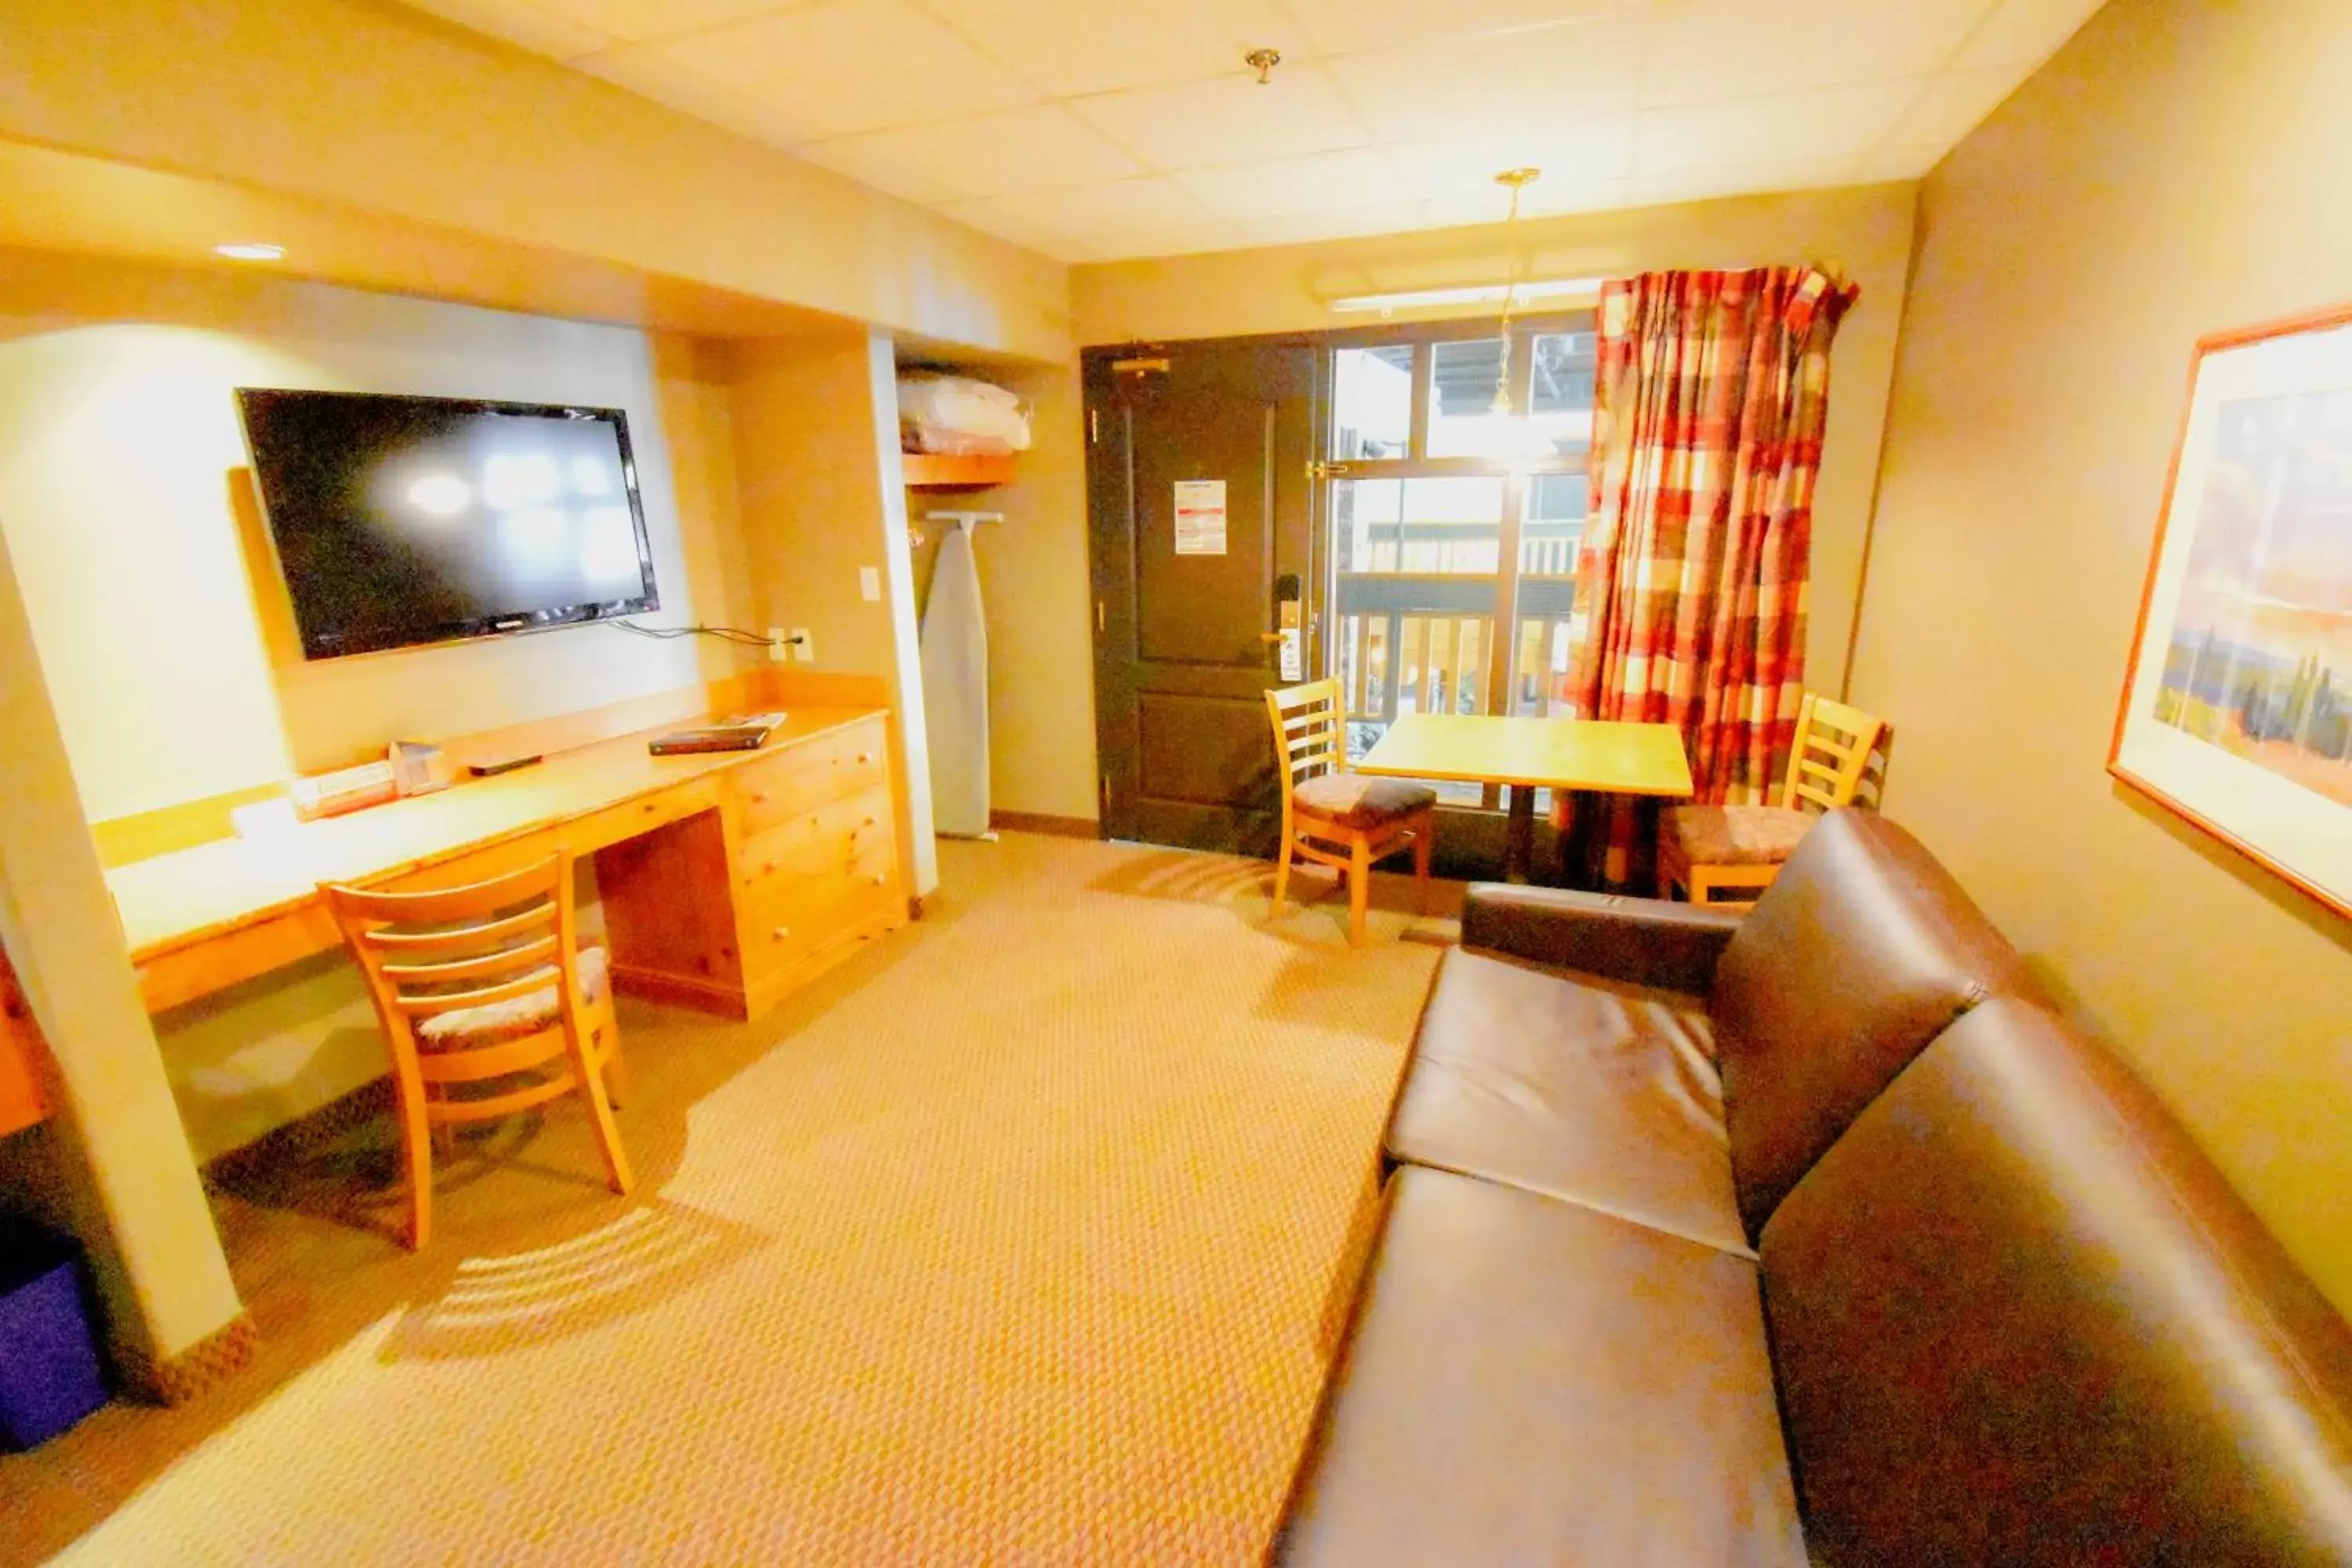 Living room in Canad Inns Destination Centre Portage la Prairie